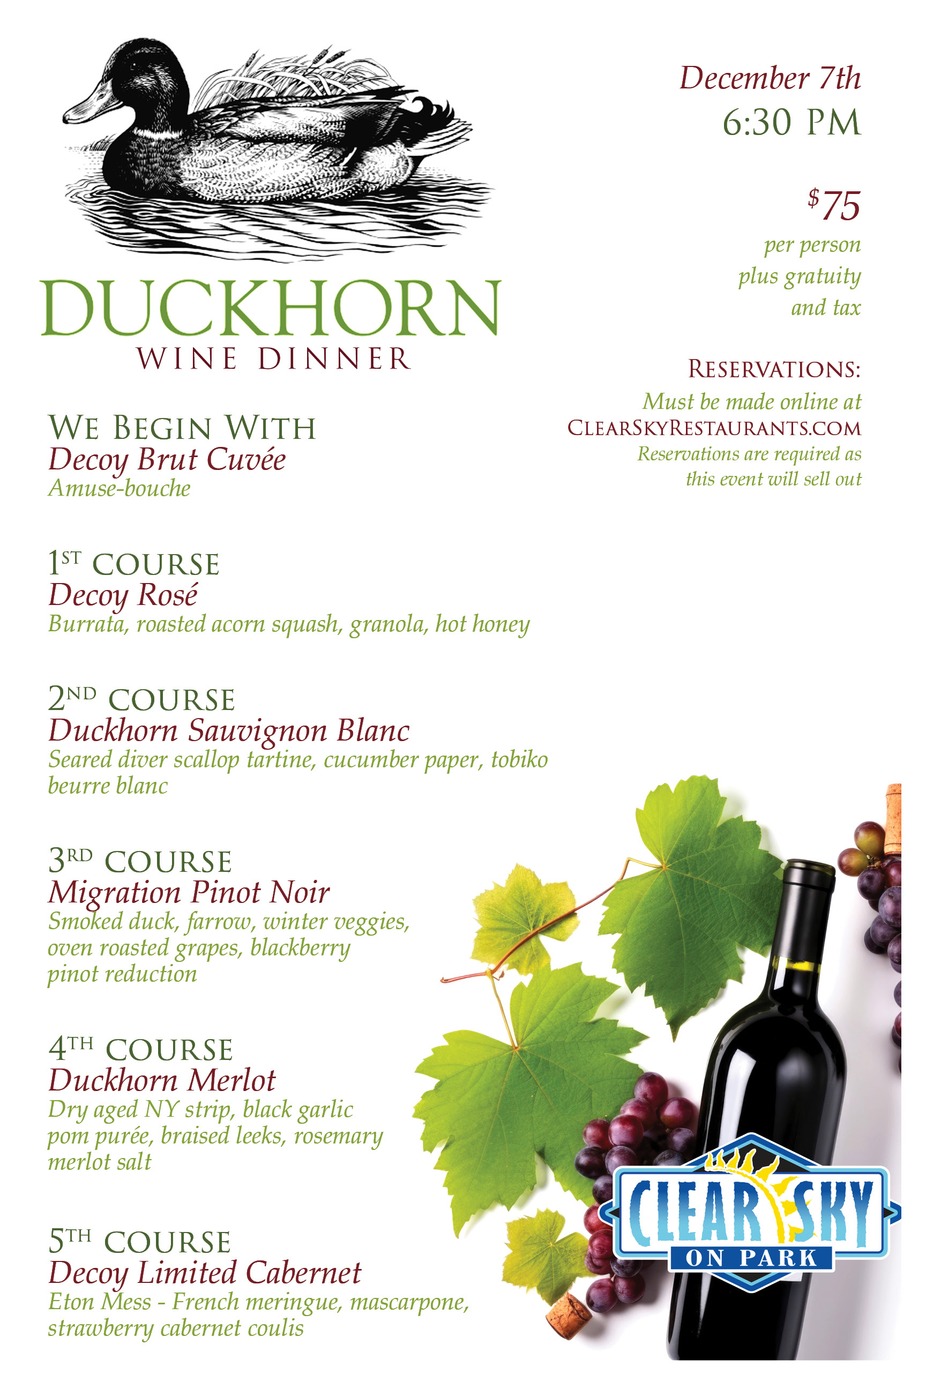 Duckhorn Wine Dinner event photo